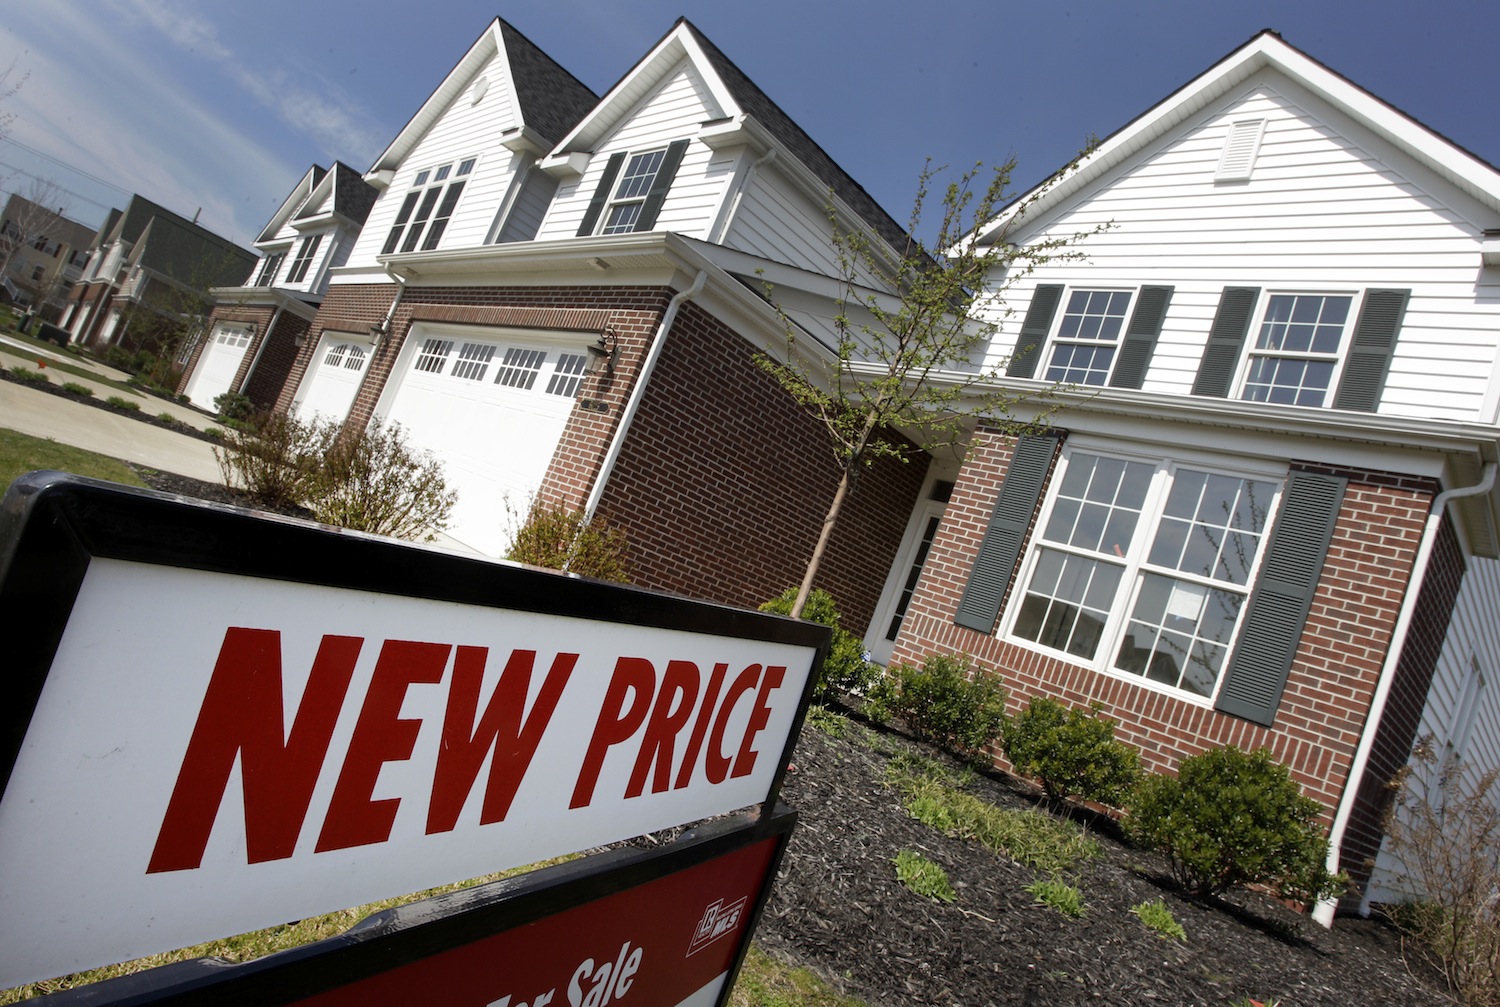 Real Estate Market recession. Housing Market. House Price. Housing Price.